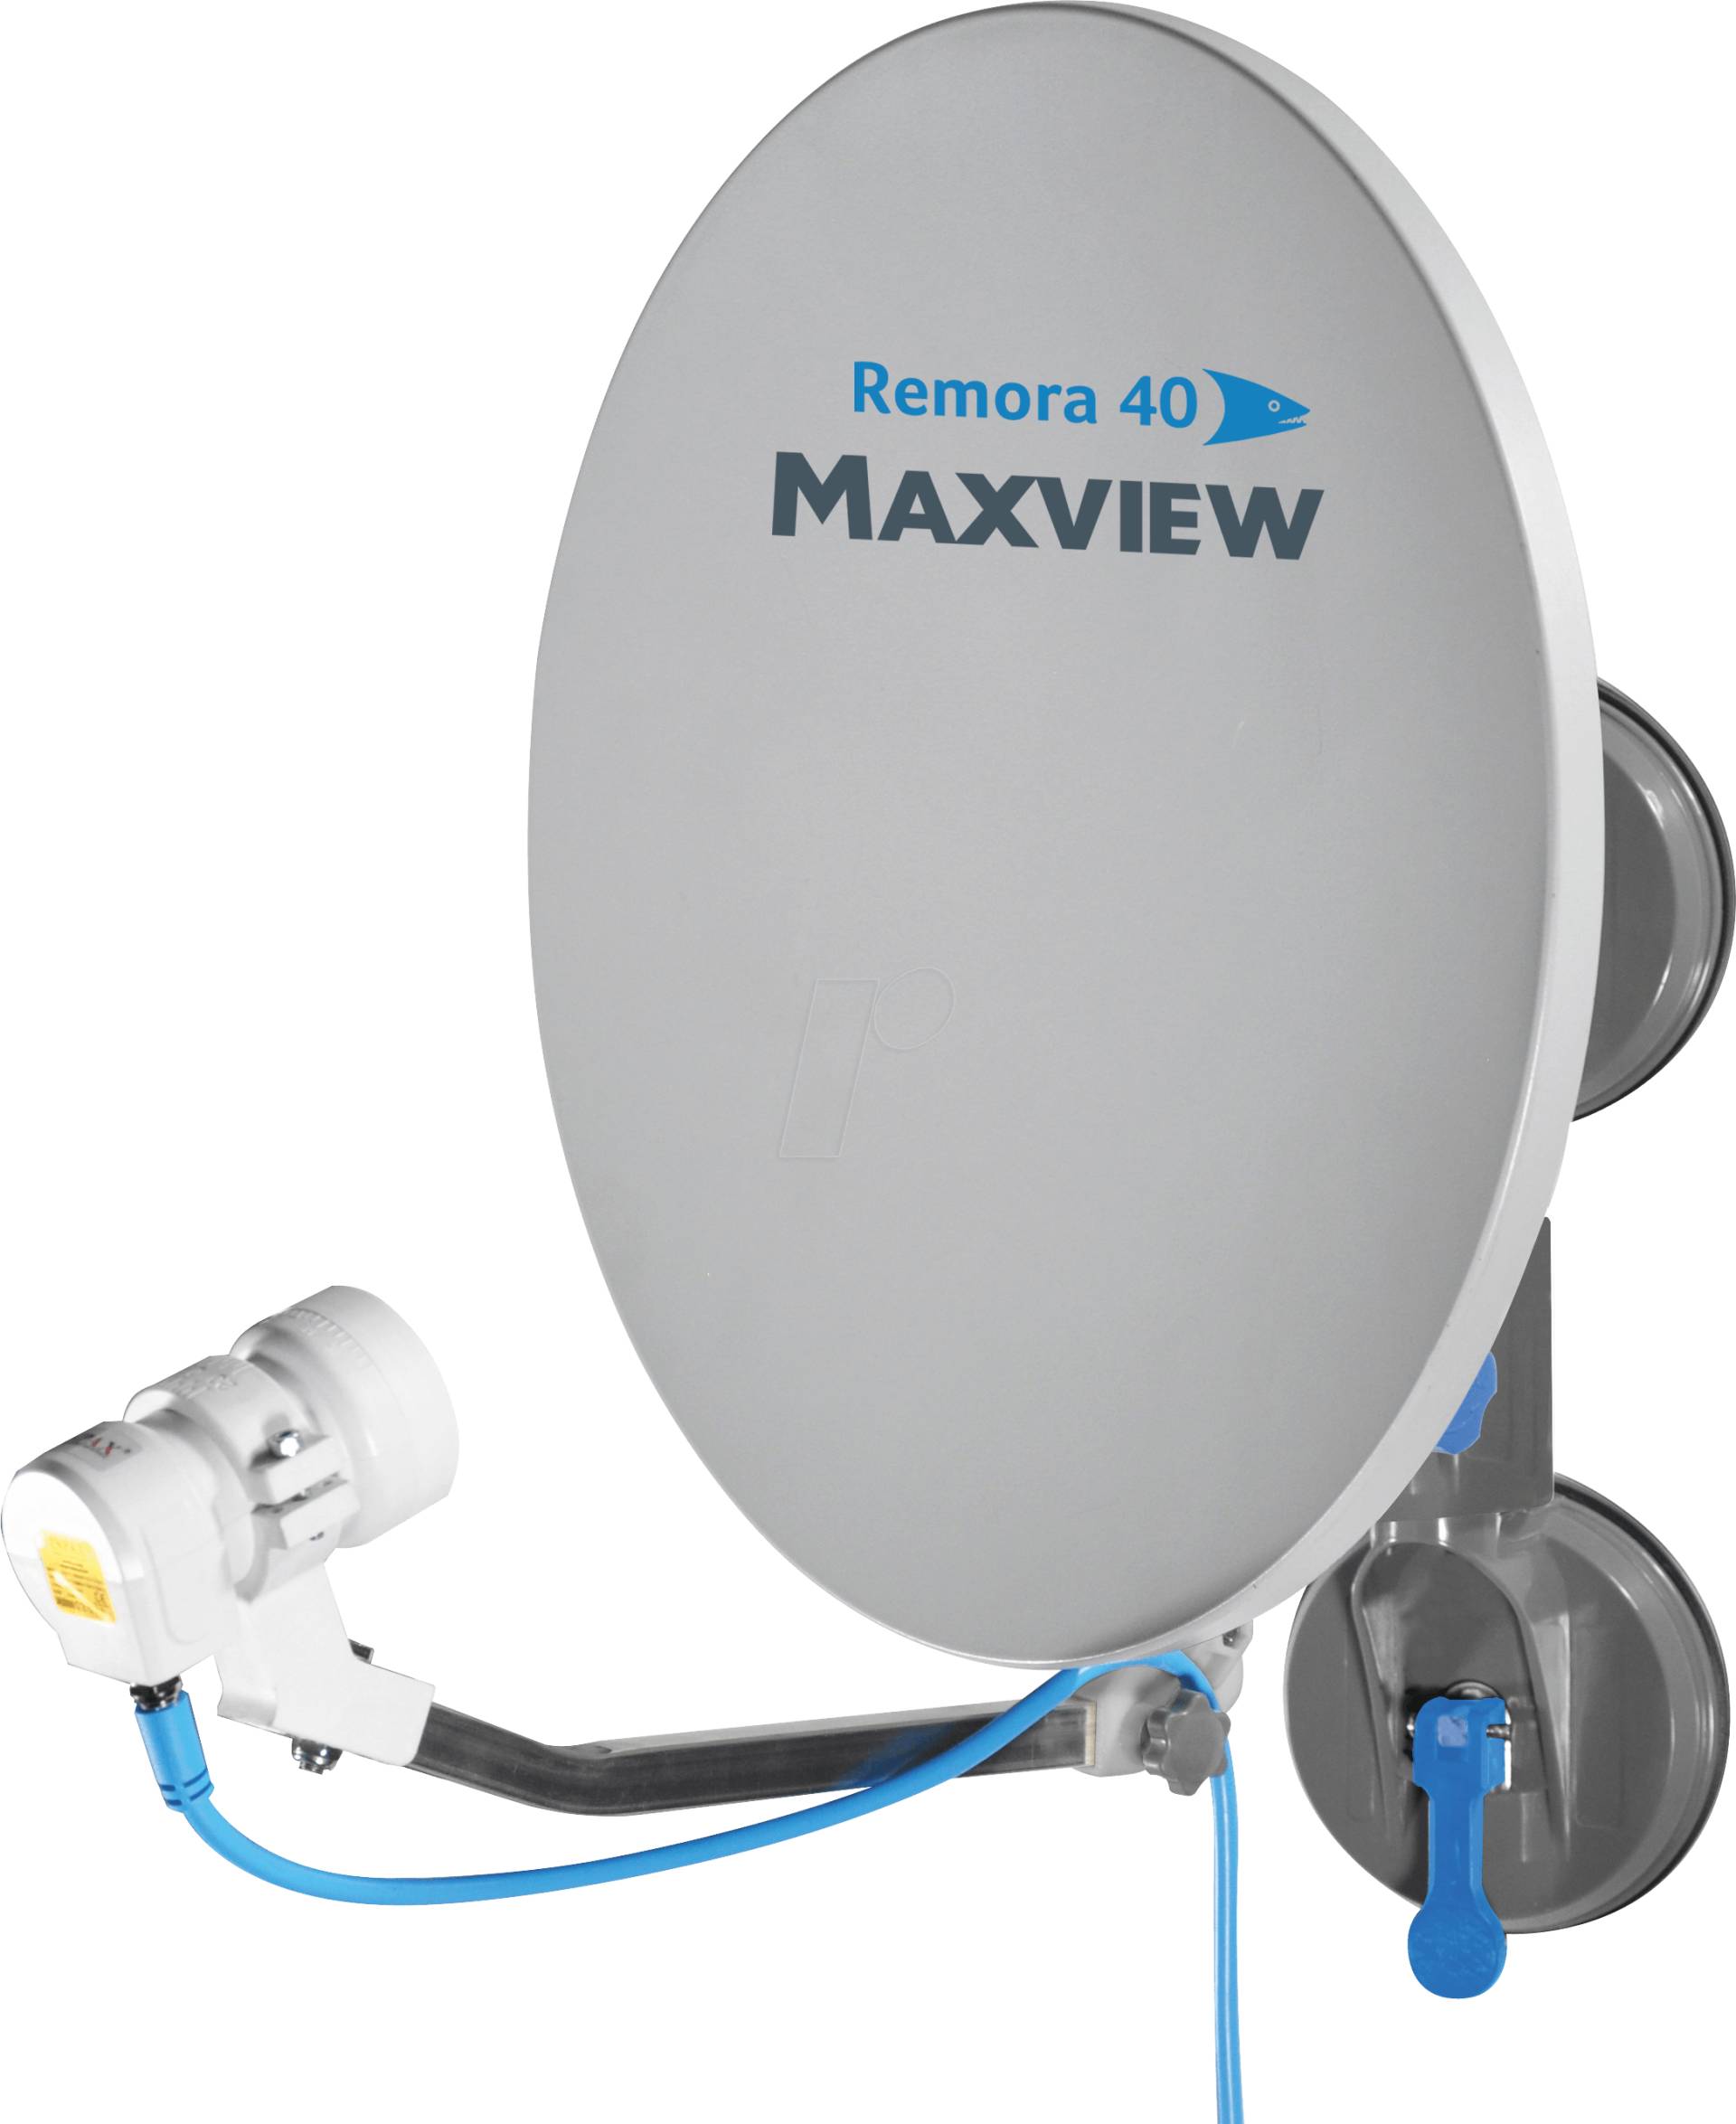 MAXVIEW 40056 - Satellitenantenne, mobil, Camping von Maxview